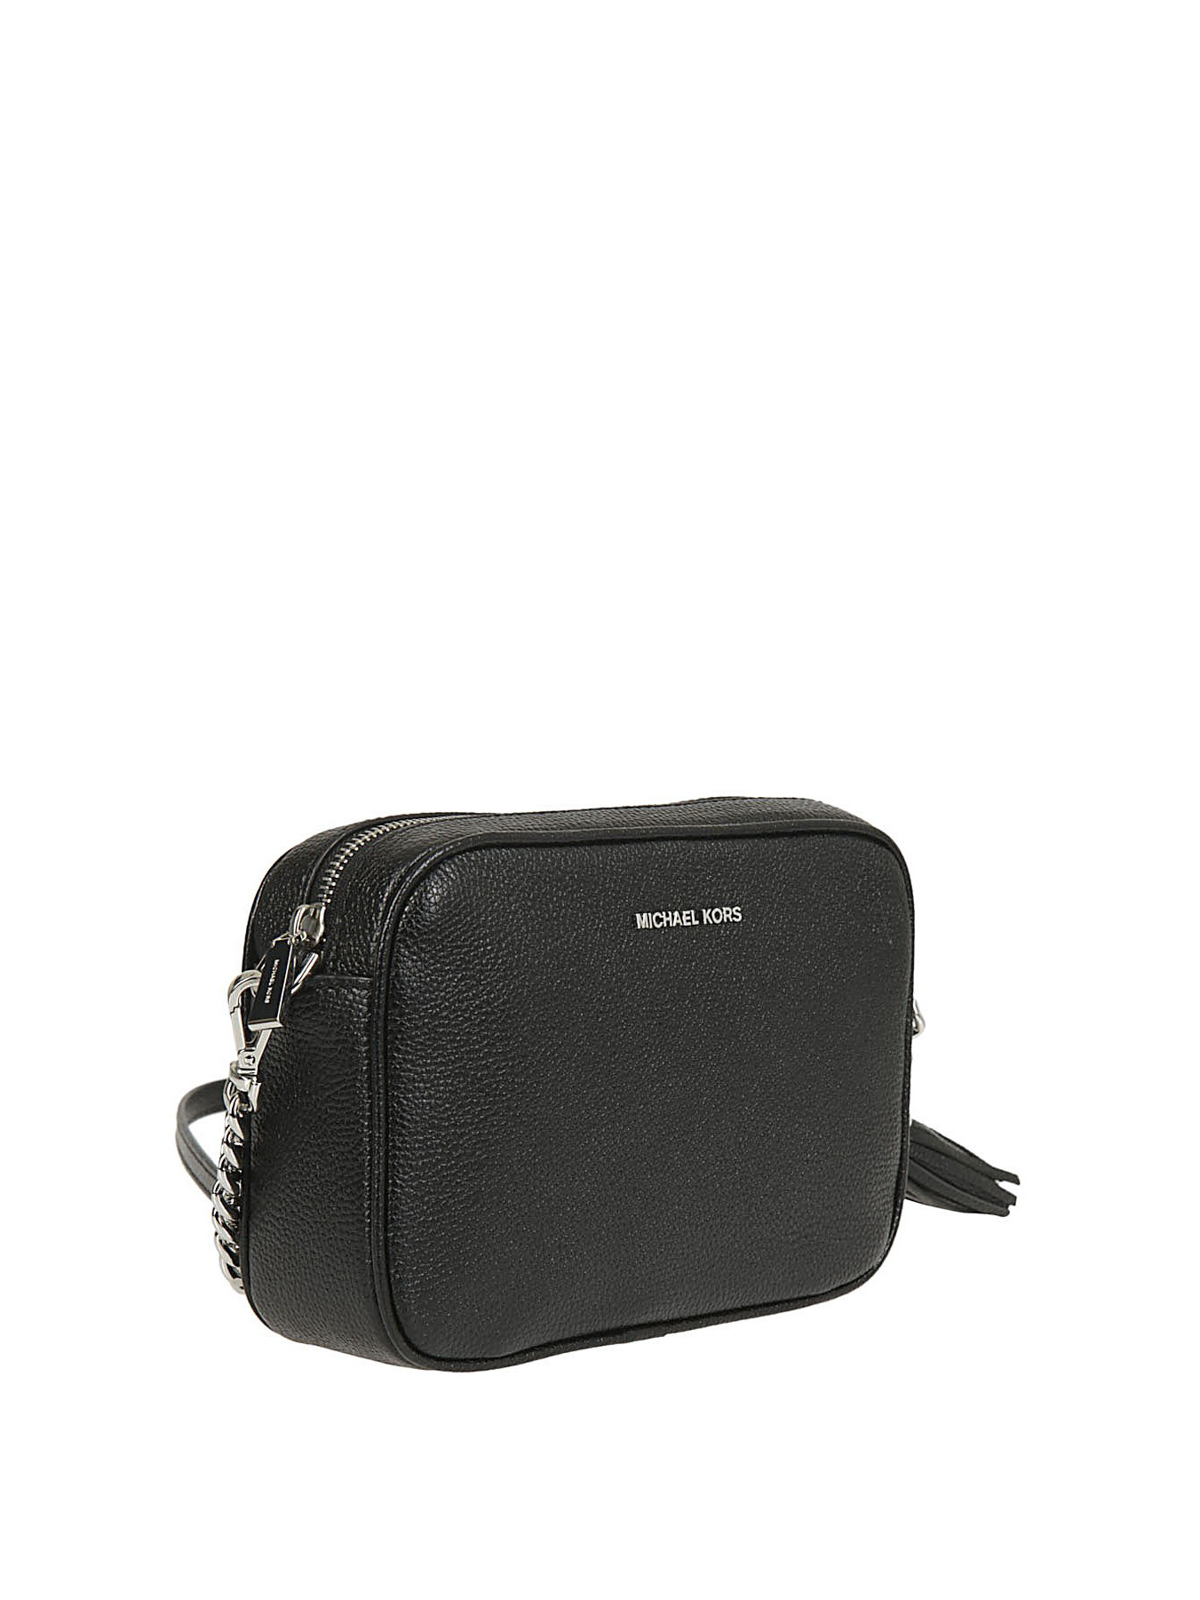 Shop Michael Kors Ginny Black Leather Cross Body Bag